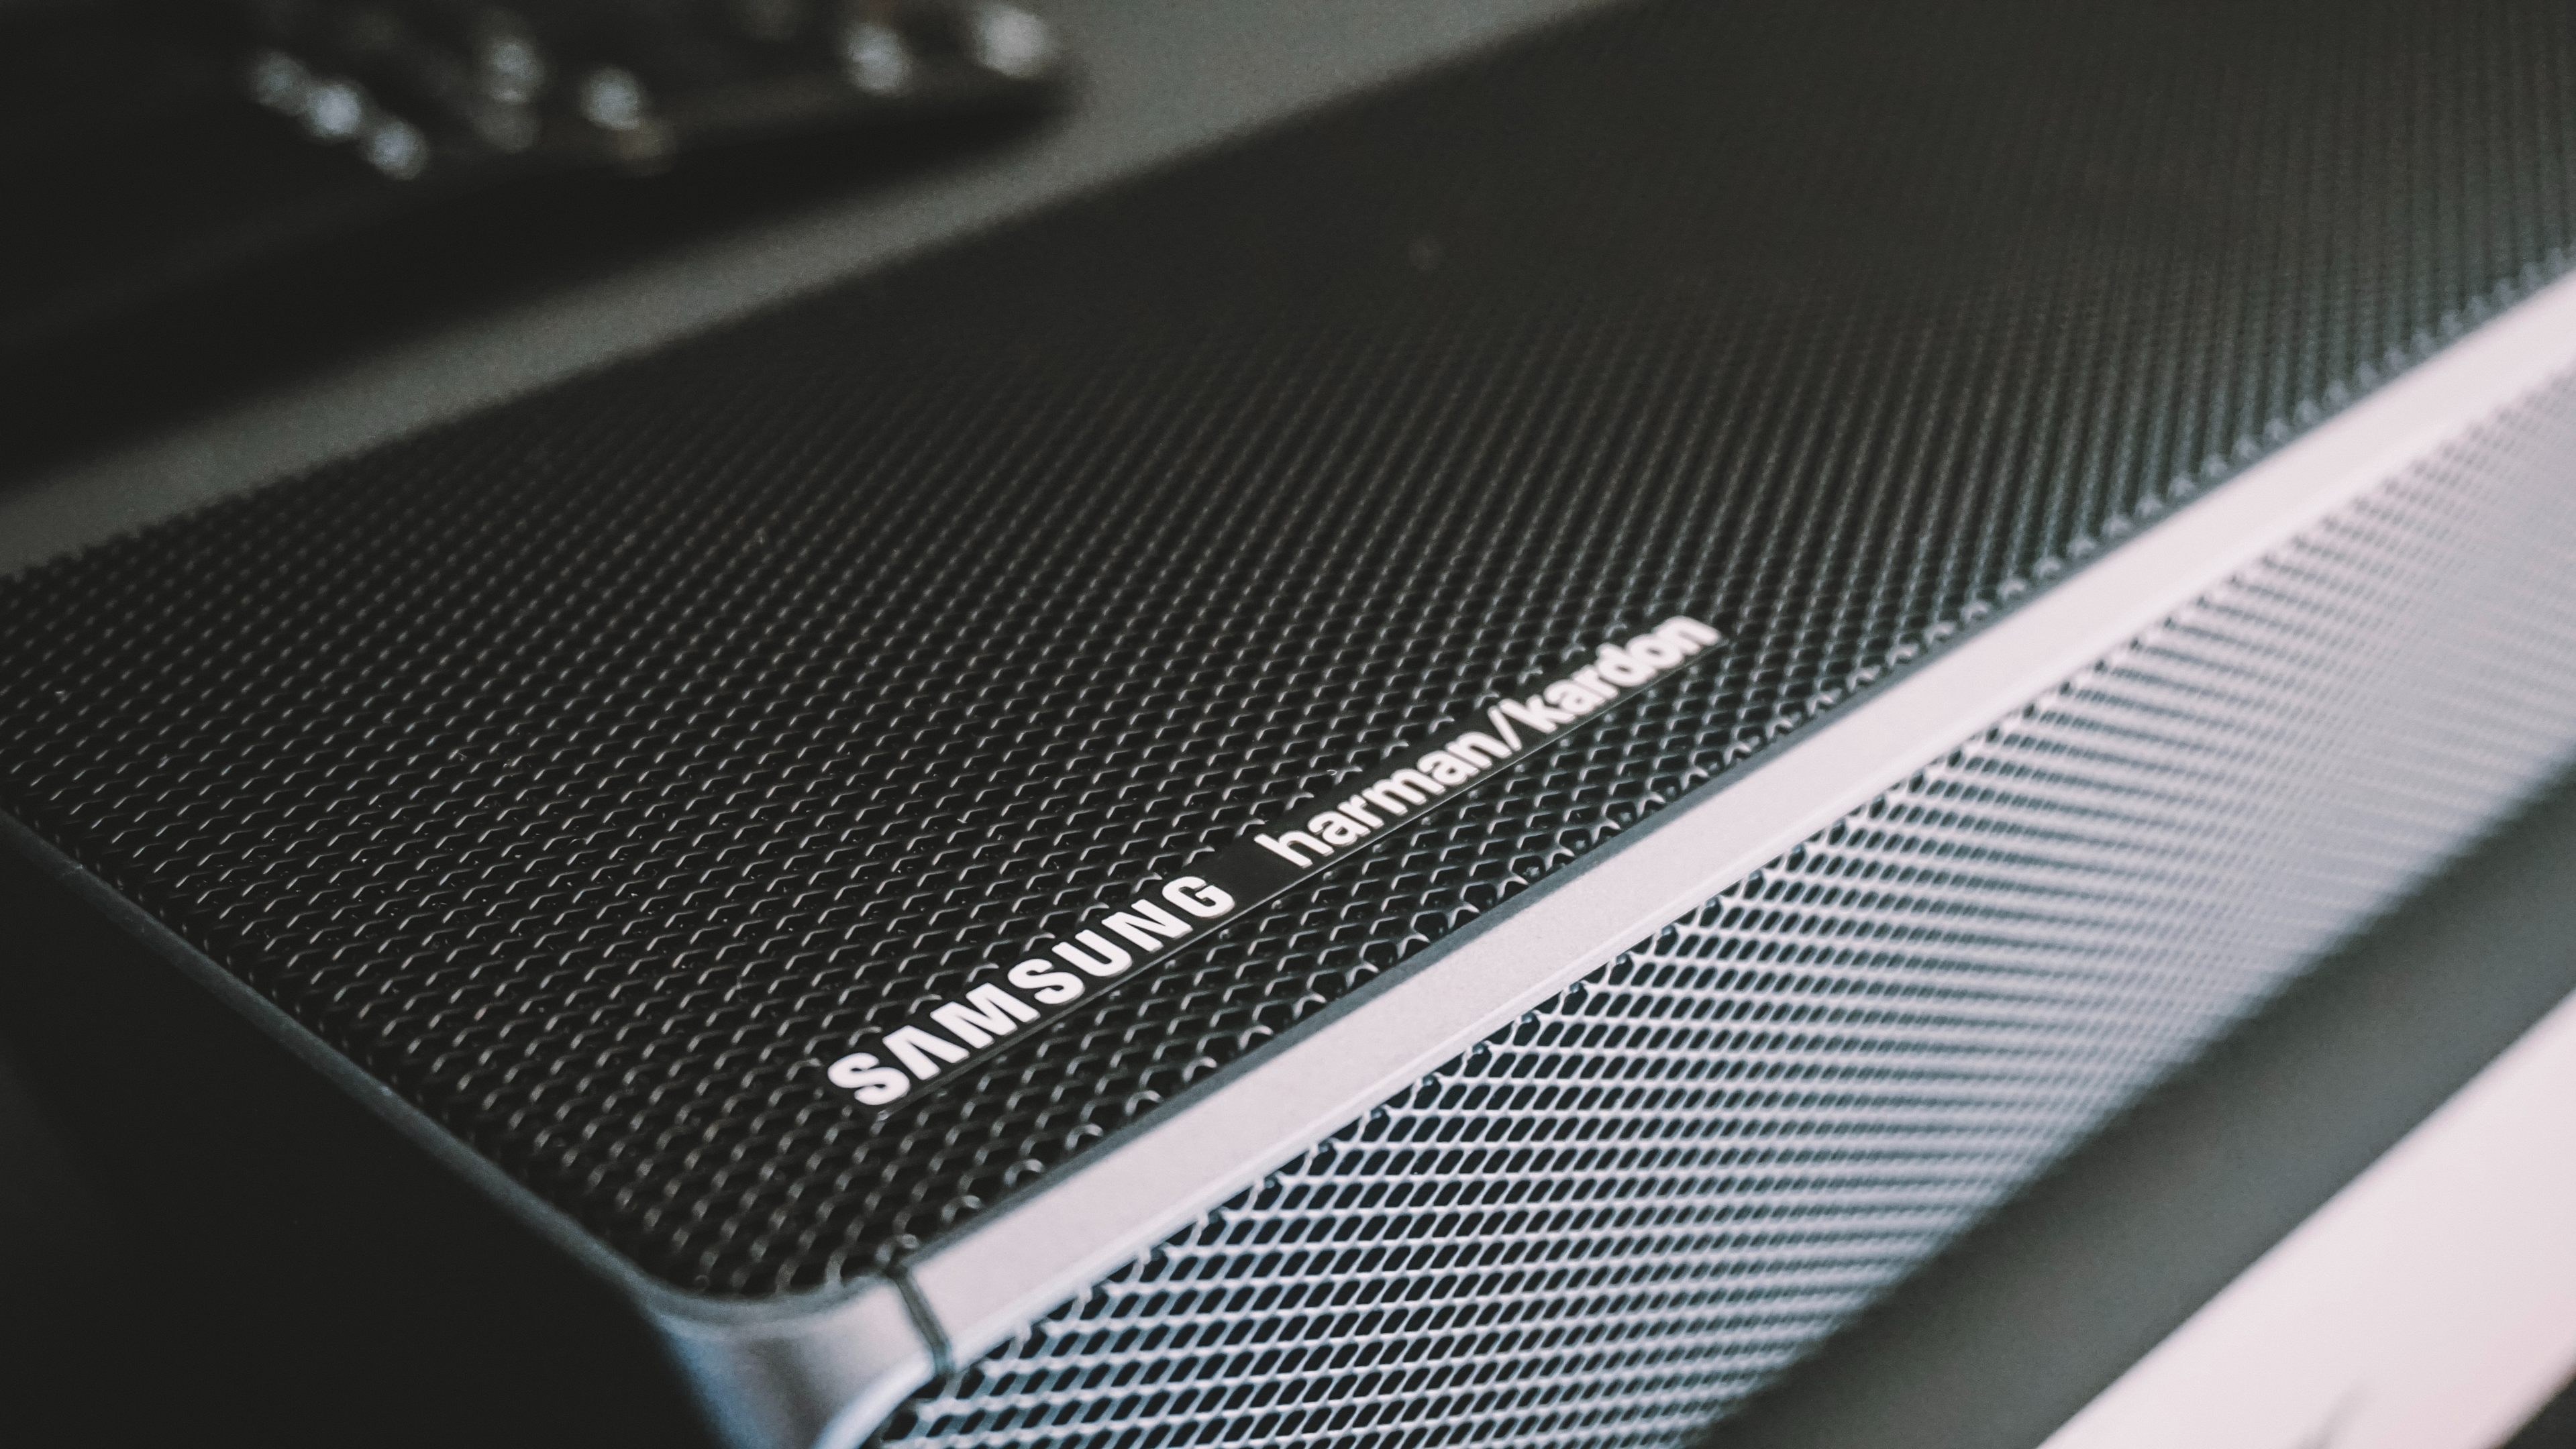 Factors To Consider For The Best Soundbar For Samsung Tv